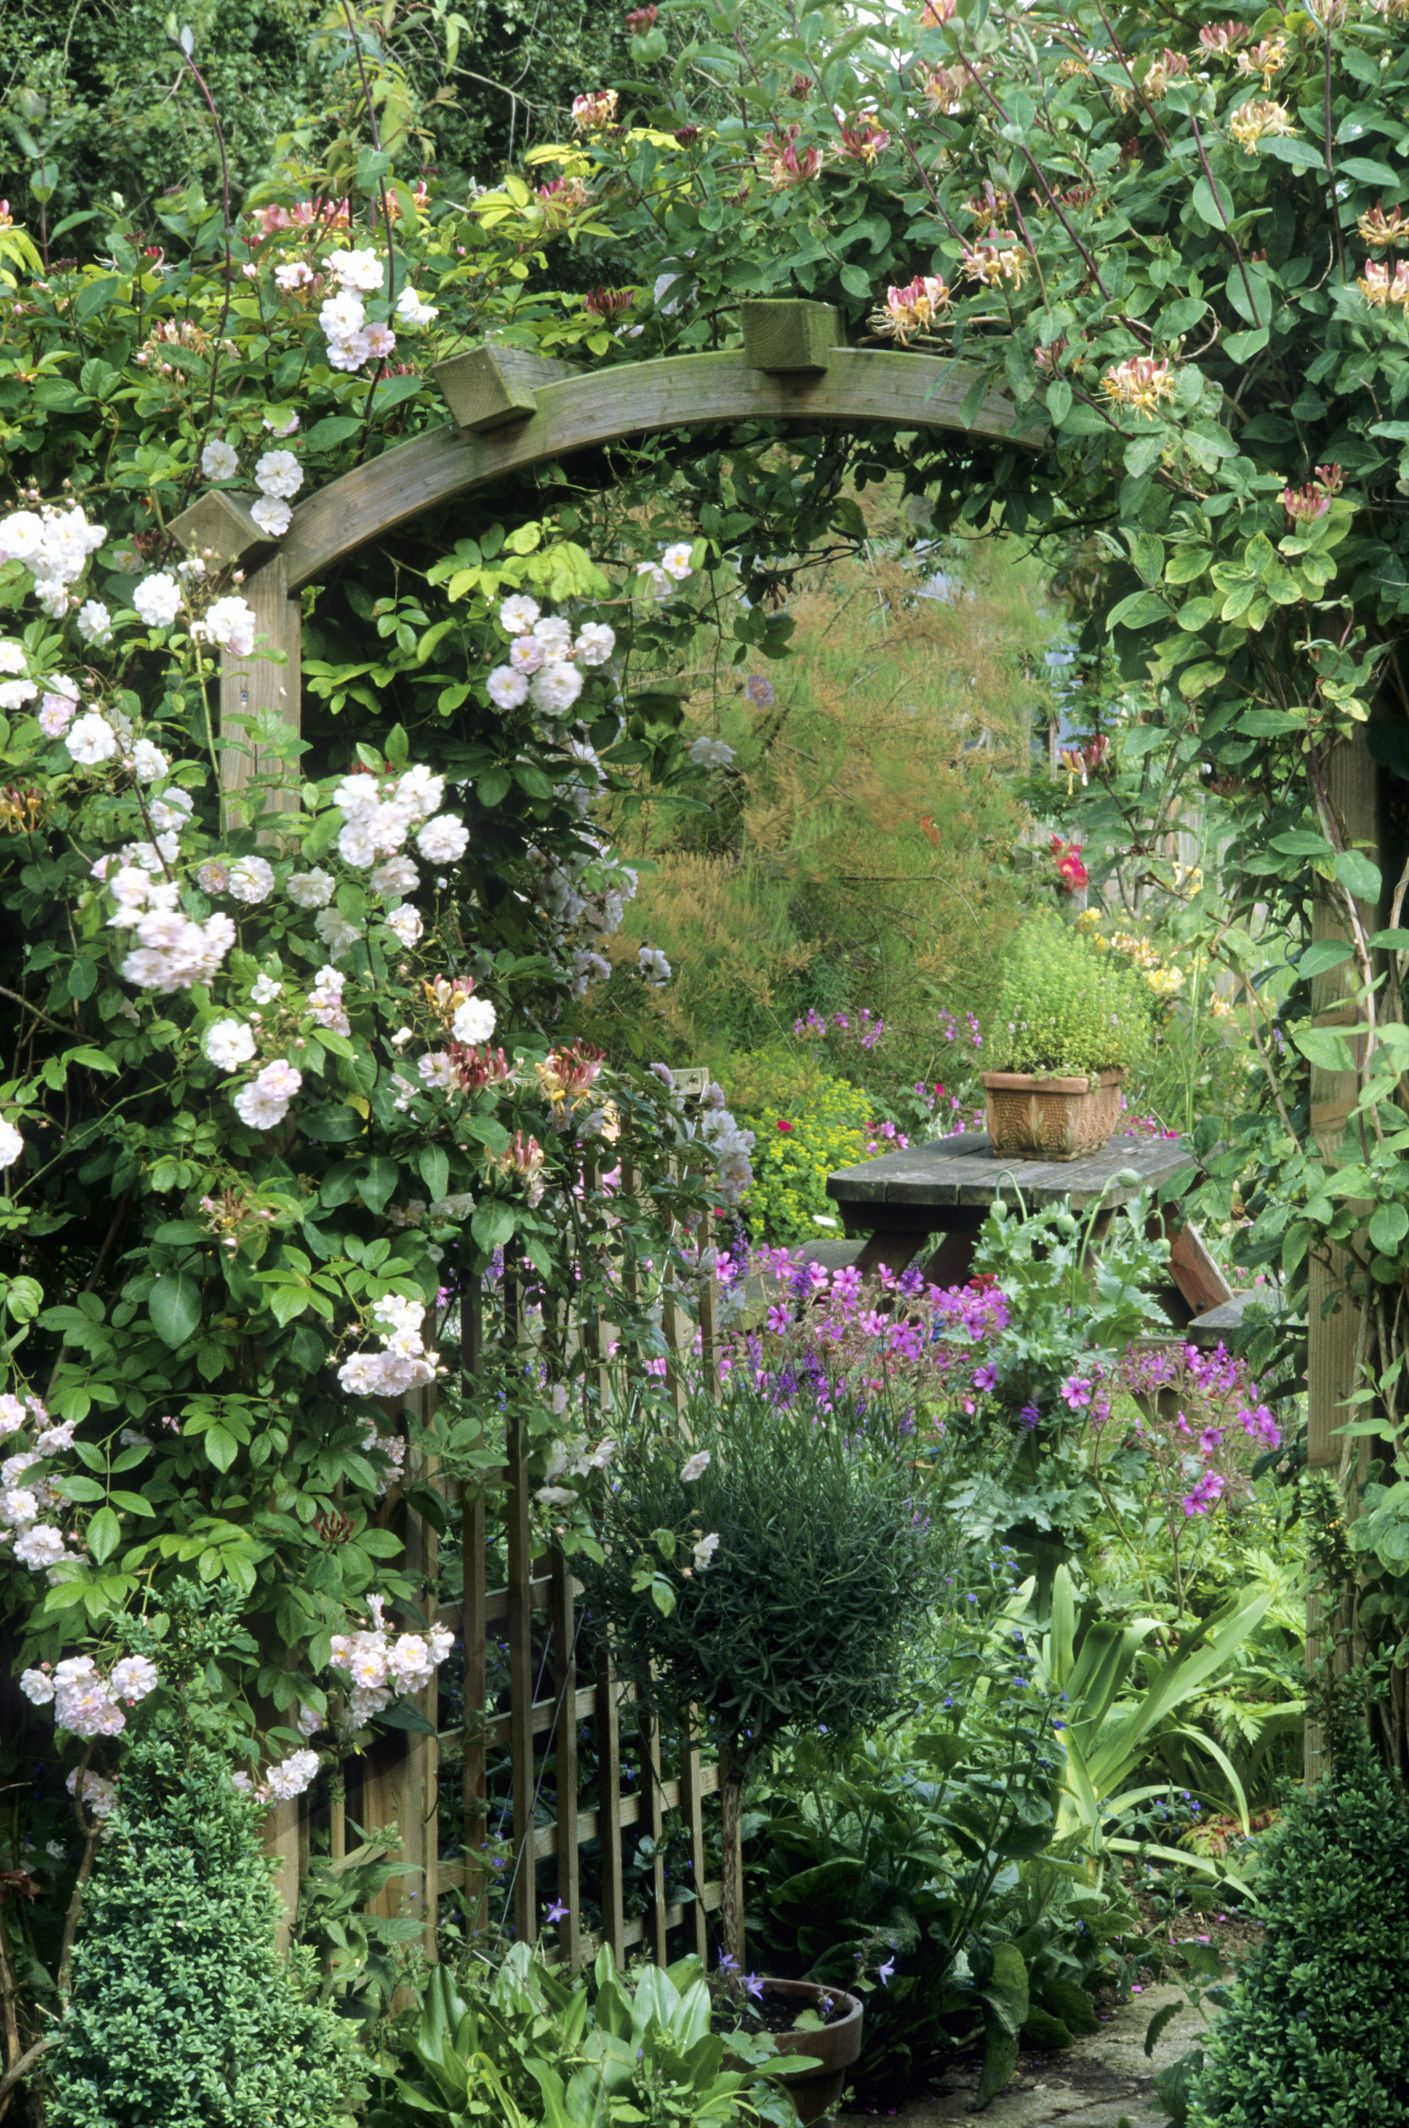 30 english gardens to visit - design ideas for english gardens